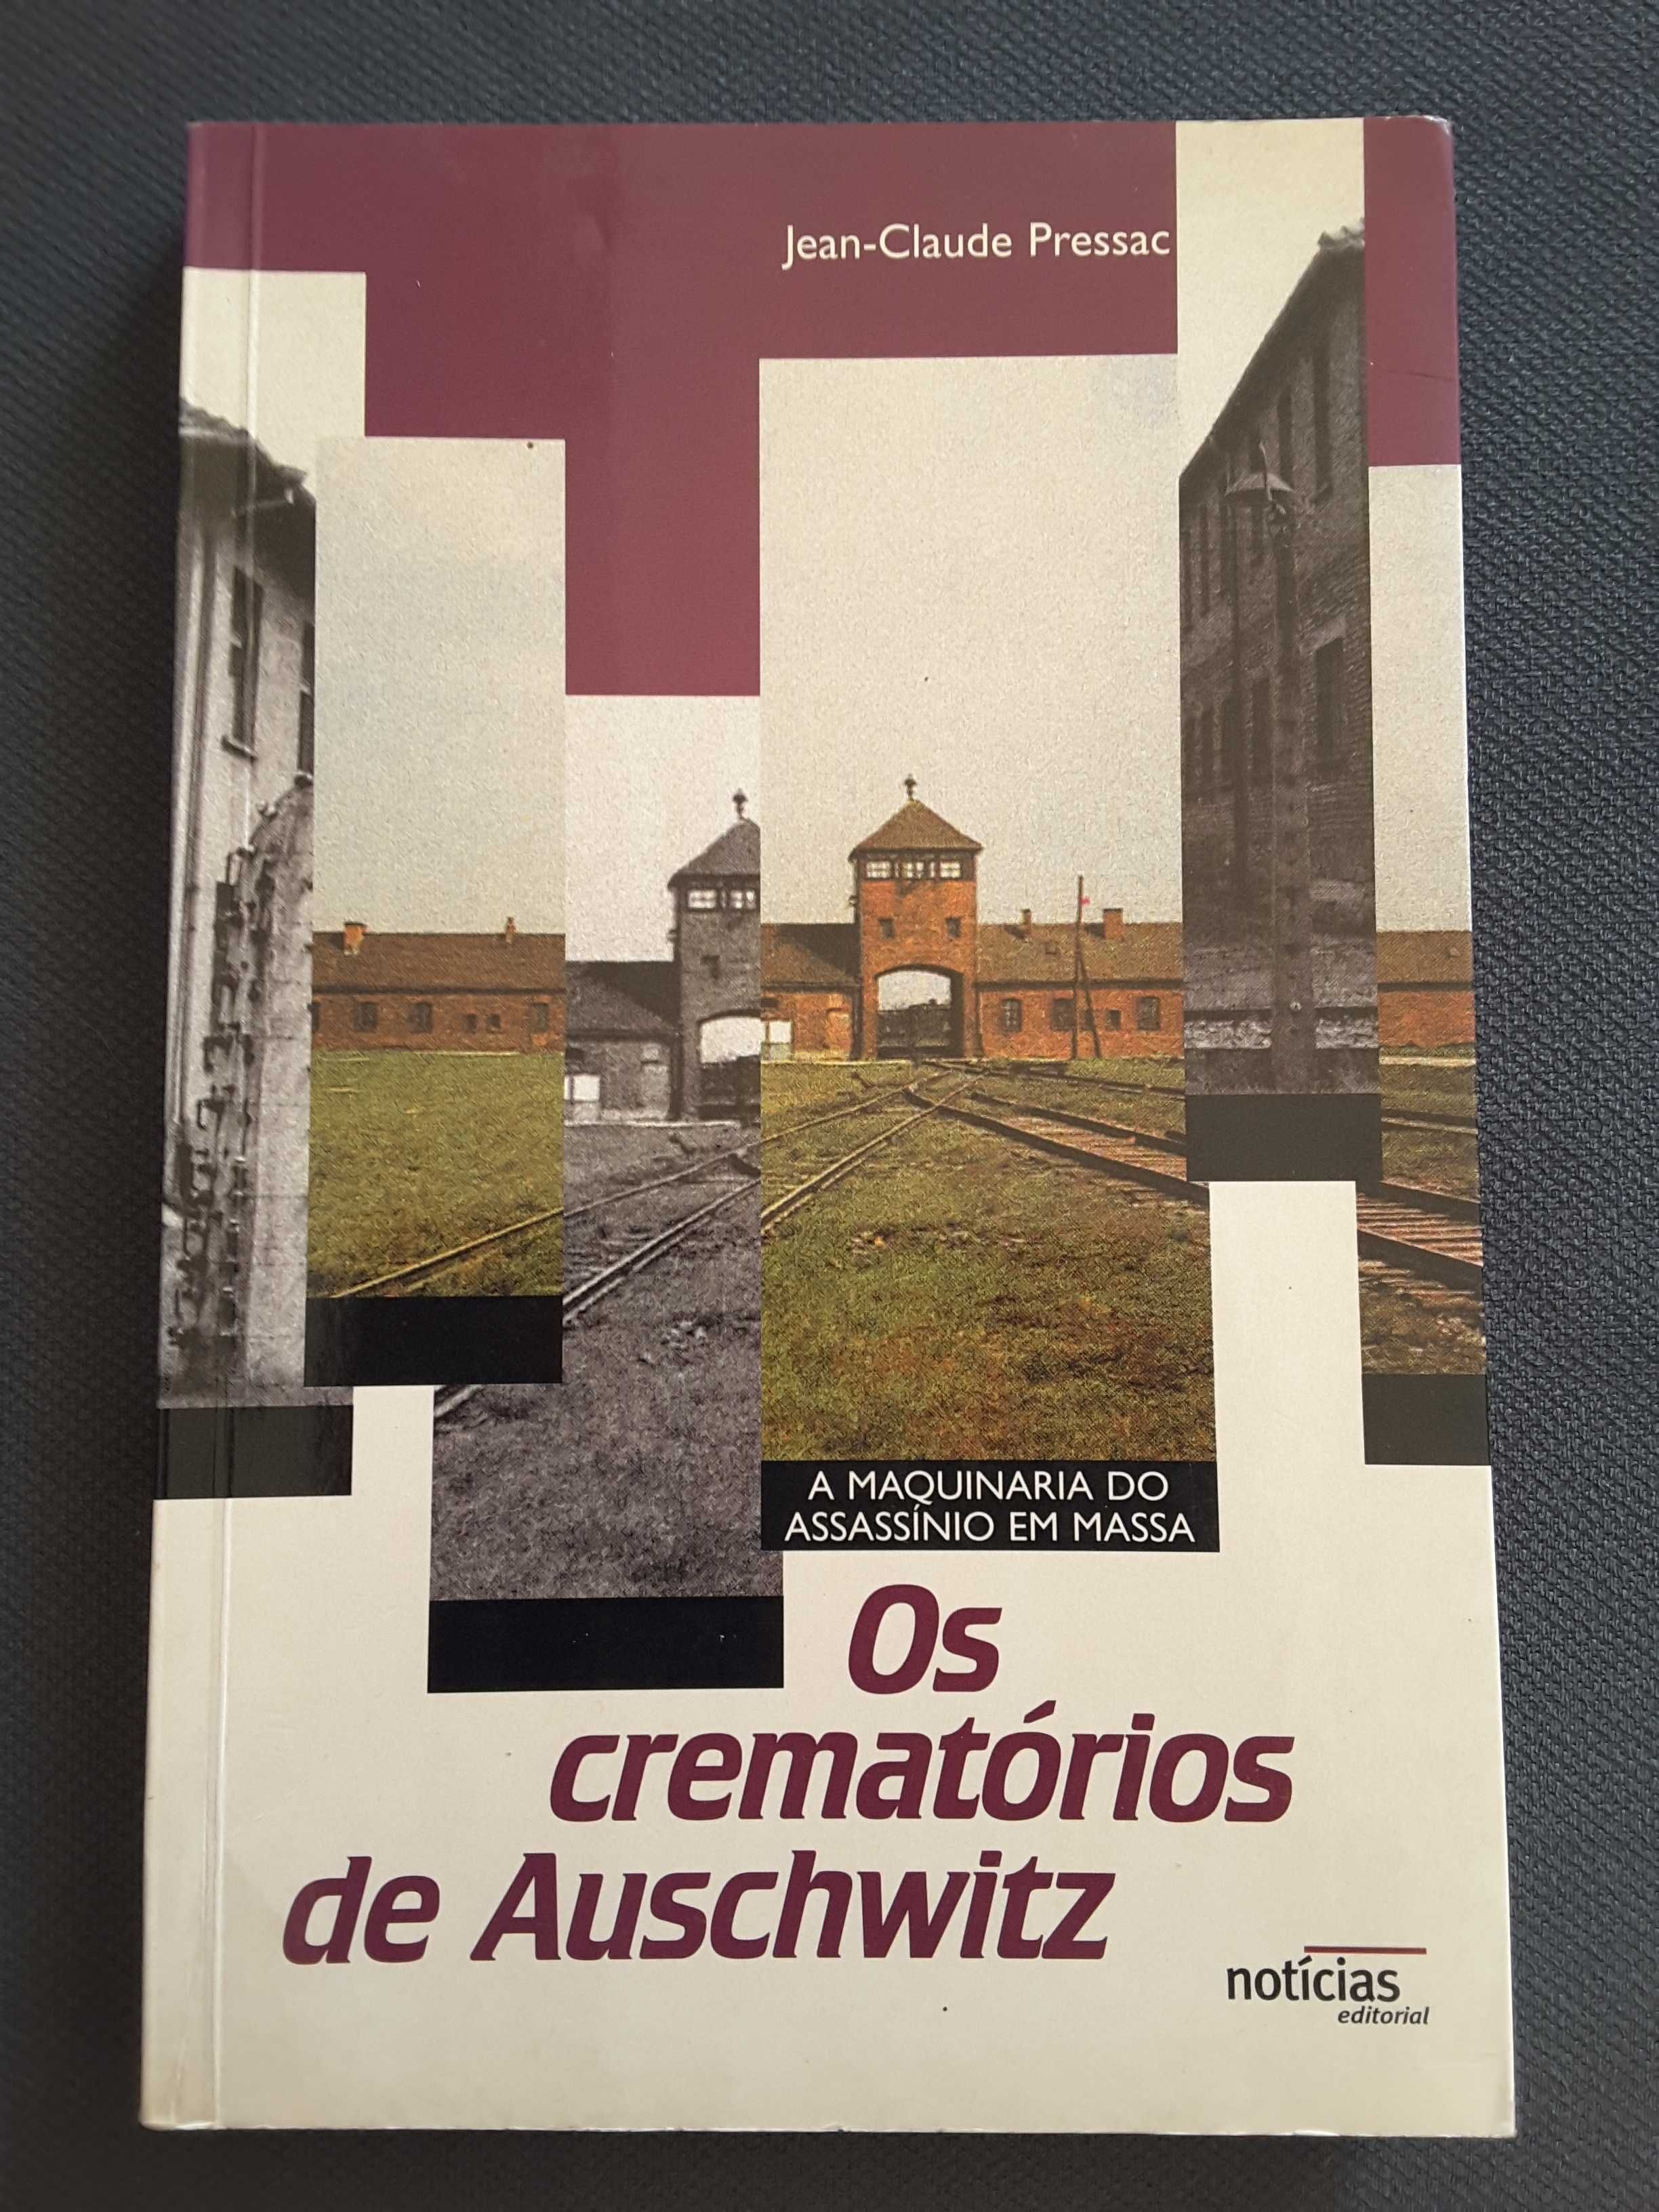 El Alamein /O Afrika Corps / Os Crematórios de Auschwitz